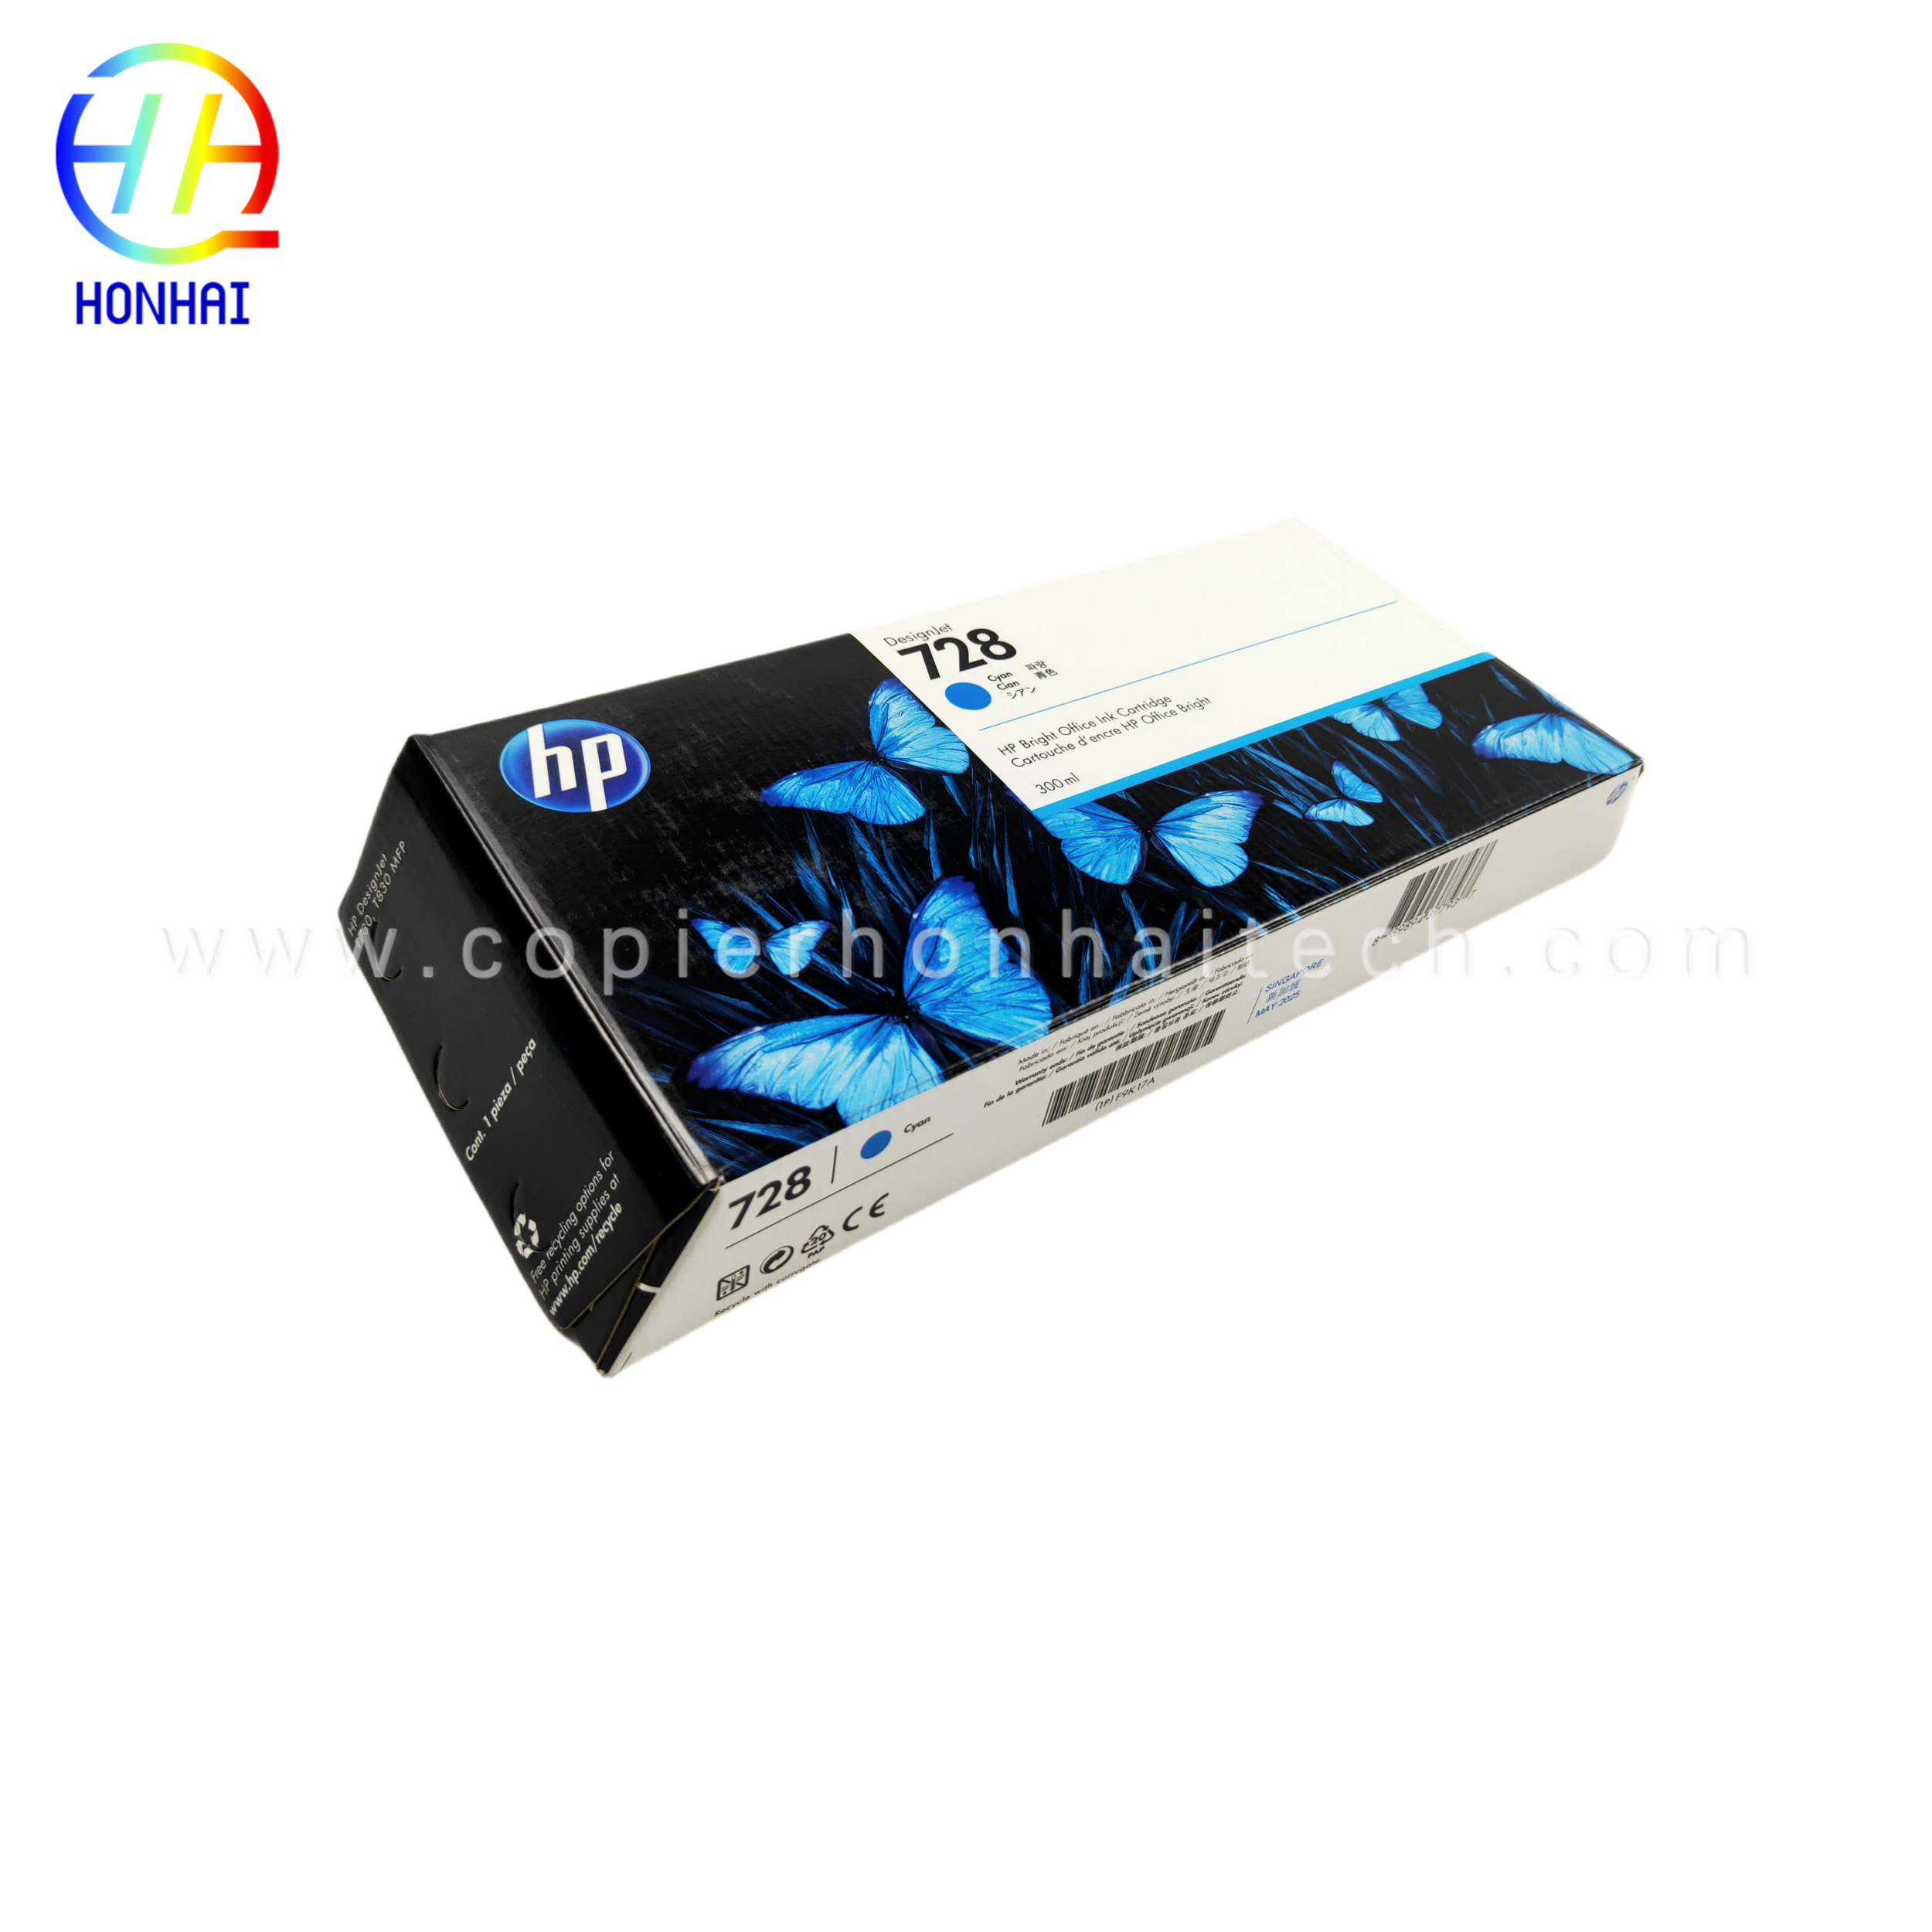 https://www.copierhonhaitech.com/original-new-ink-cartridge-cyan-for-hp-designjet-t730-and-t830-large-format-plotter-printers-and-hp-729-designjet-printhead- 728-f9k17a-produkto/